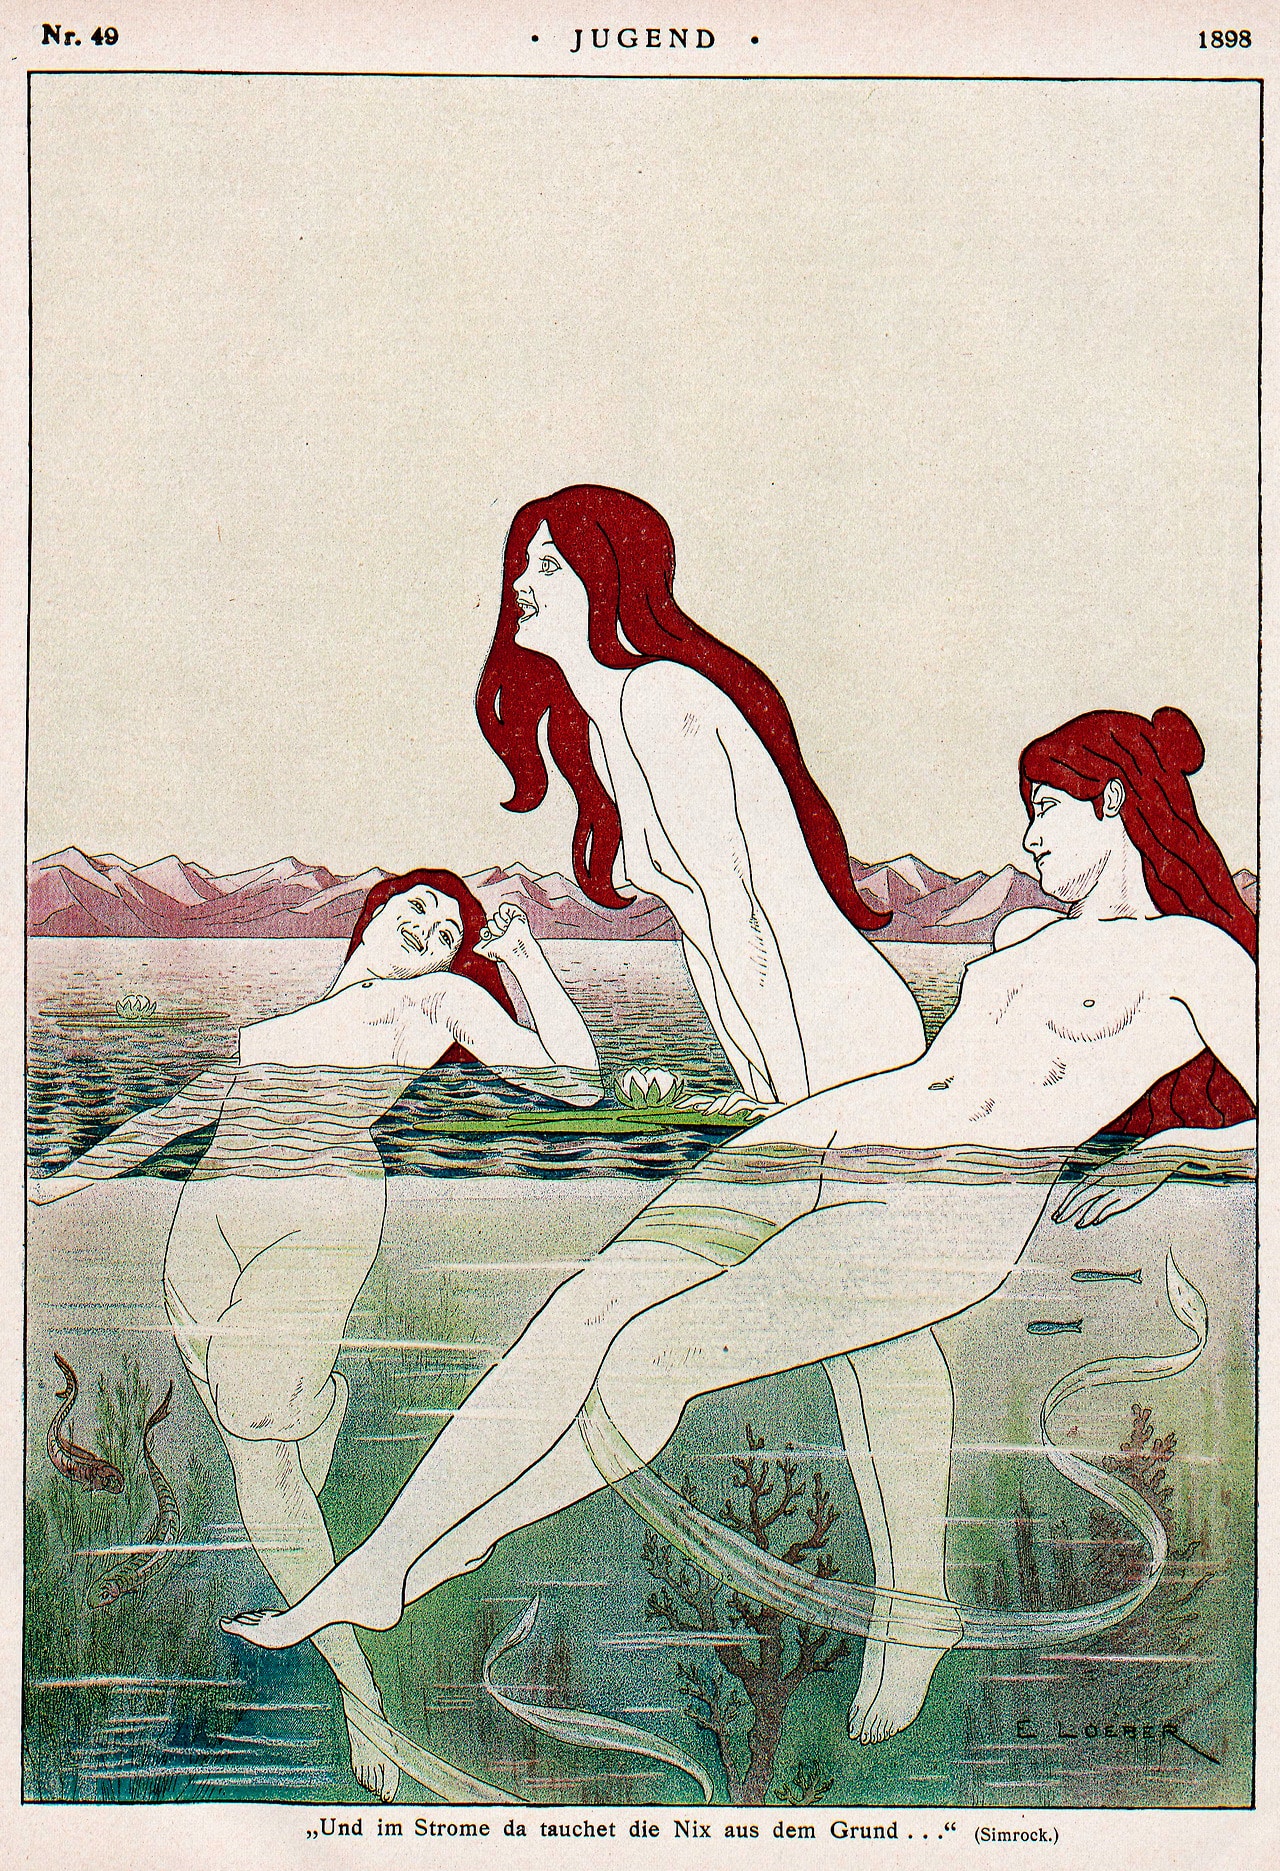 E. Loeber, ''Jugend'', 1898